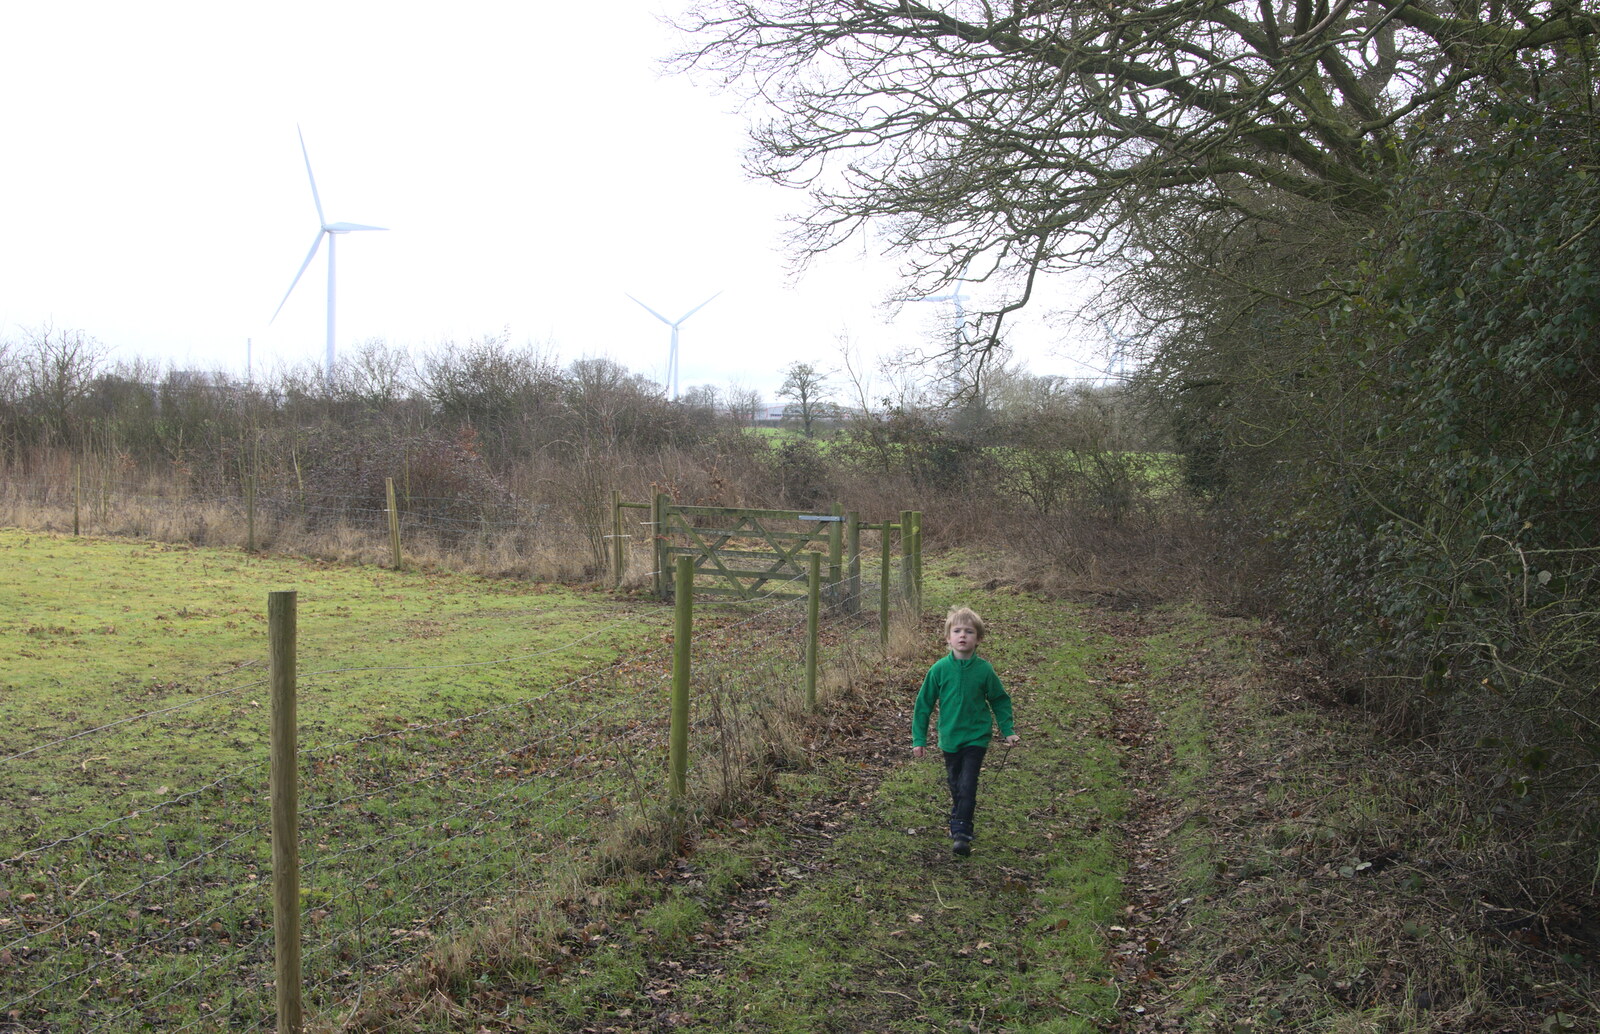 Harry roams the path from A Winter's Walk, Thrandeston, Suffolk - 5th February 2017